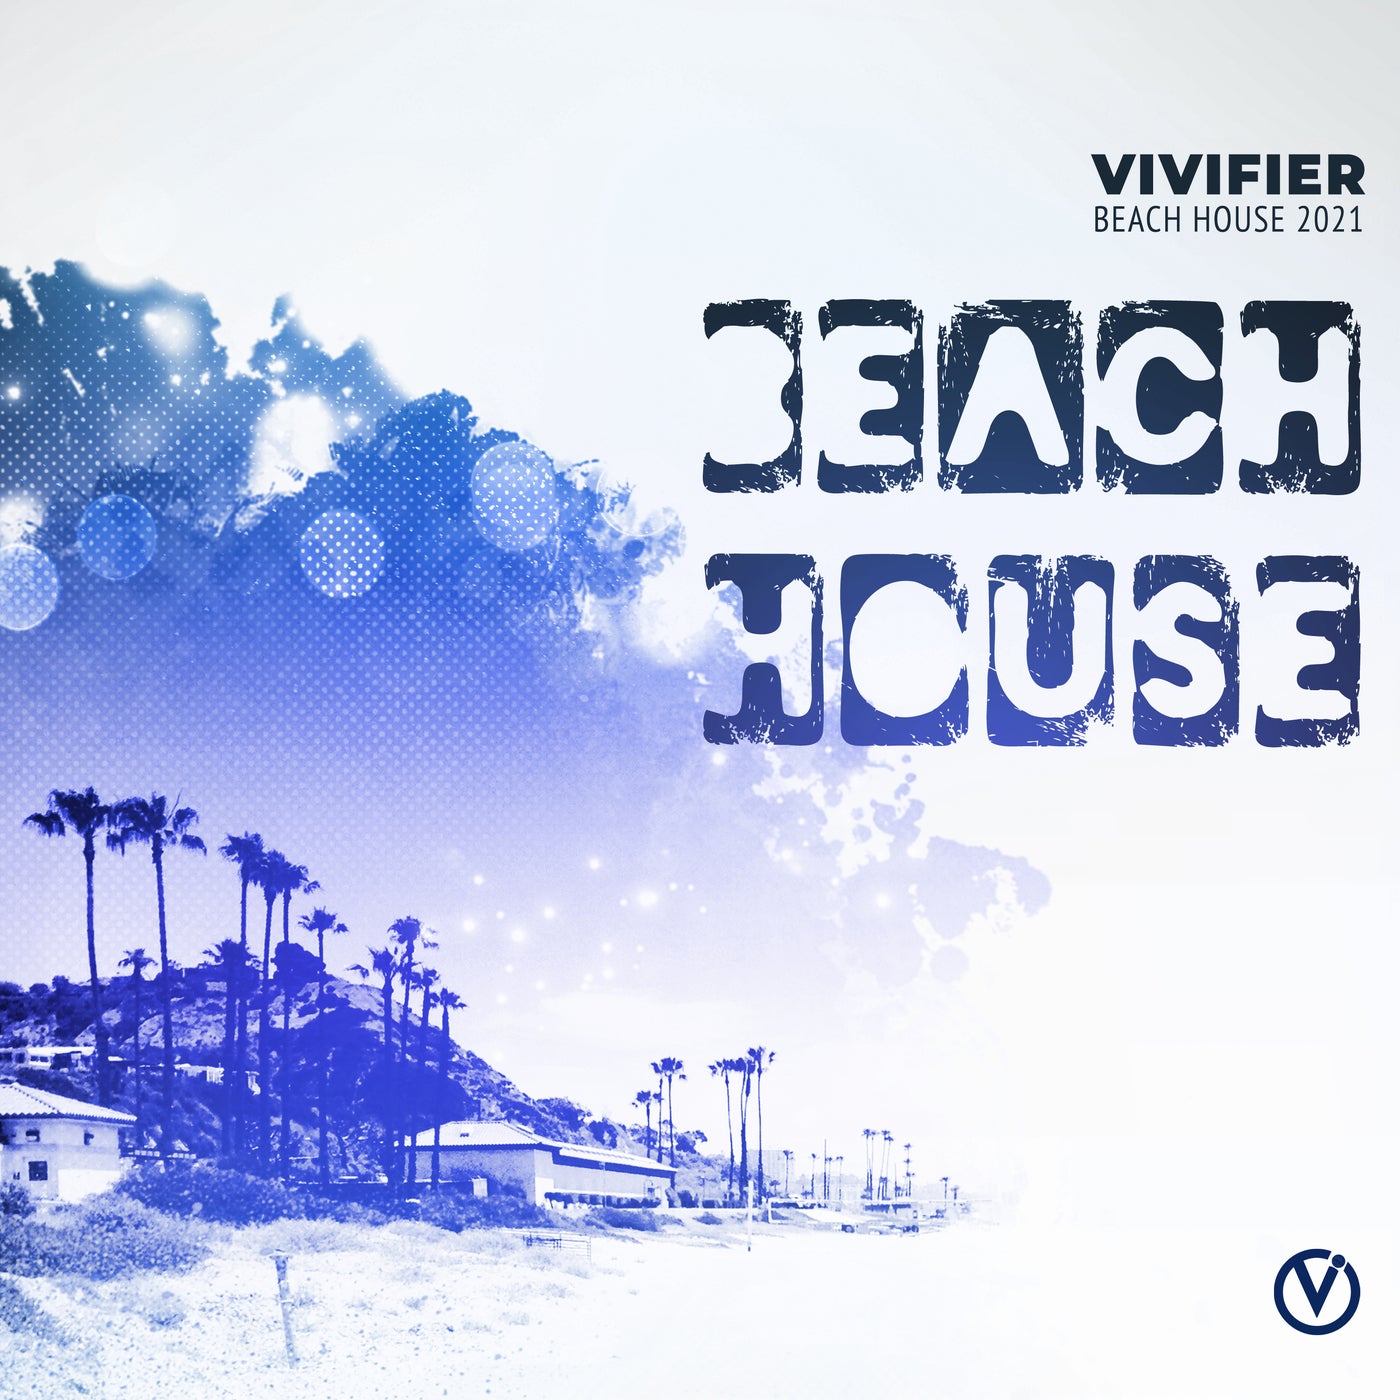 Vivifier Beach House 2021